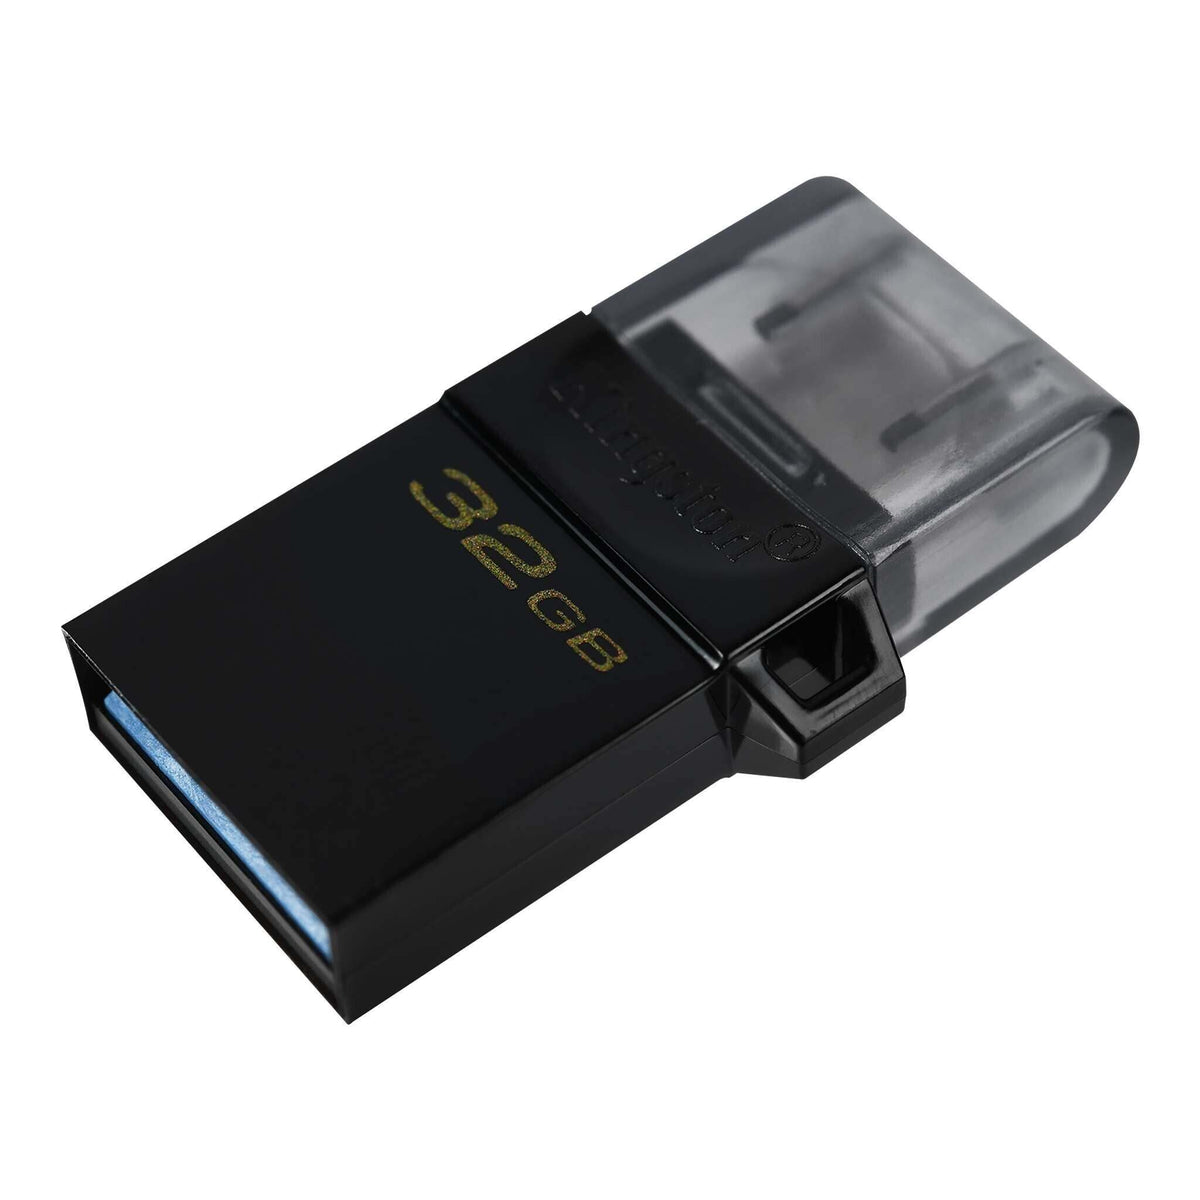 USB kľúč 32GB Kingston DT MicroDuo, 3.0 (DTDUO3G2/32GB)